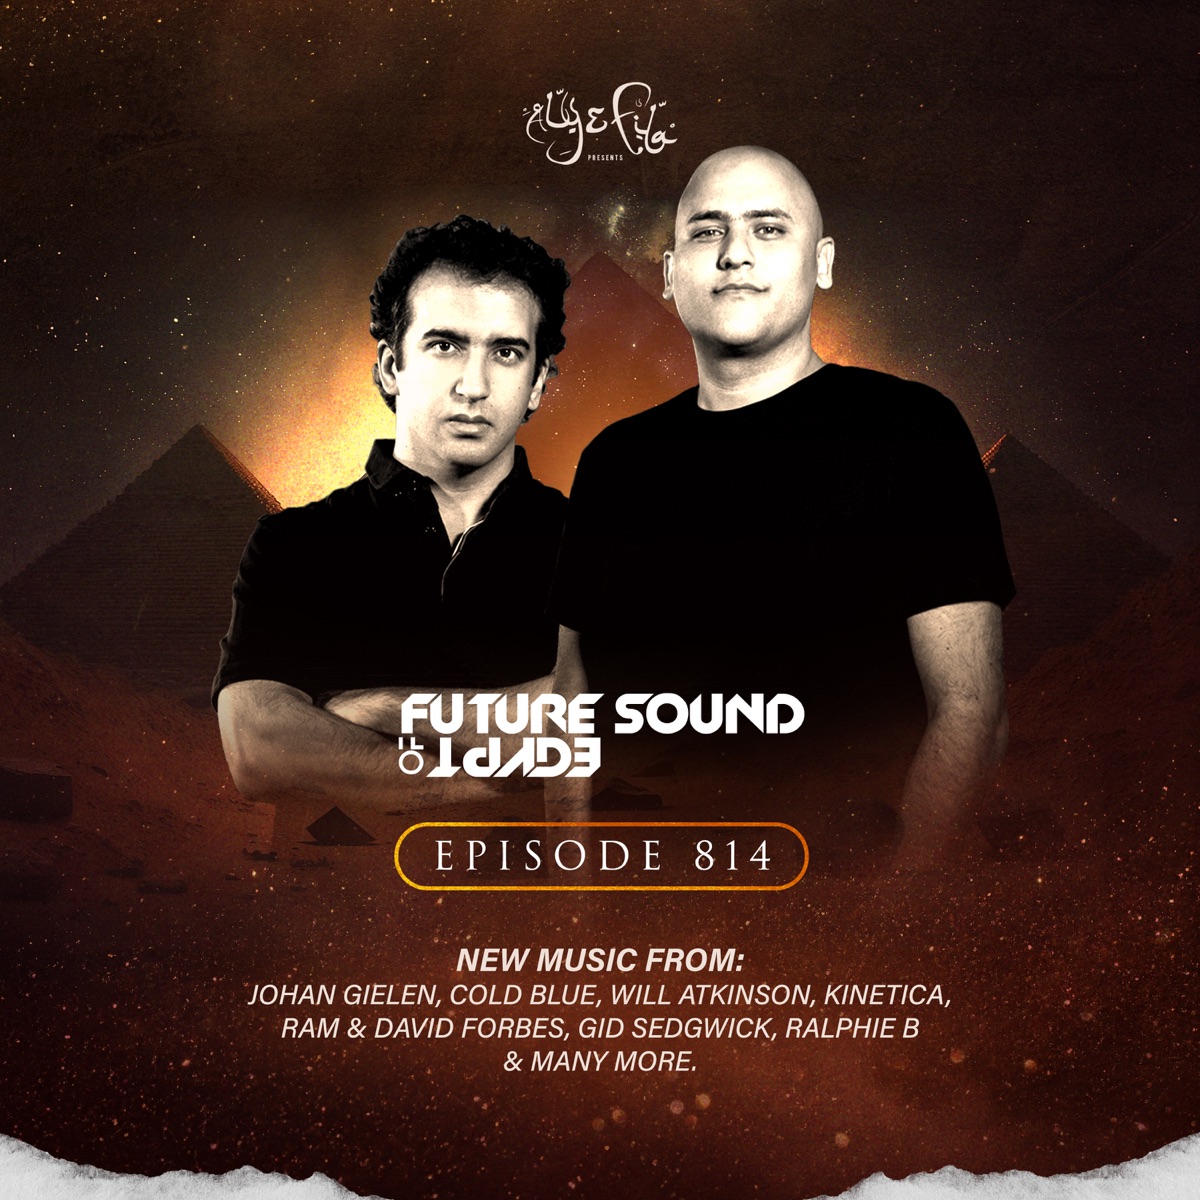 FSOE 814 - Future Sound of Egypt Episode 814 - Album by Aly & Fila, Aly &  Fila FSOE Radio & Future Sound of Egypt - Apple Music